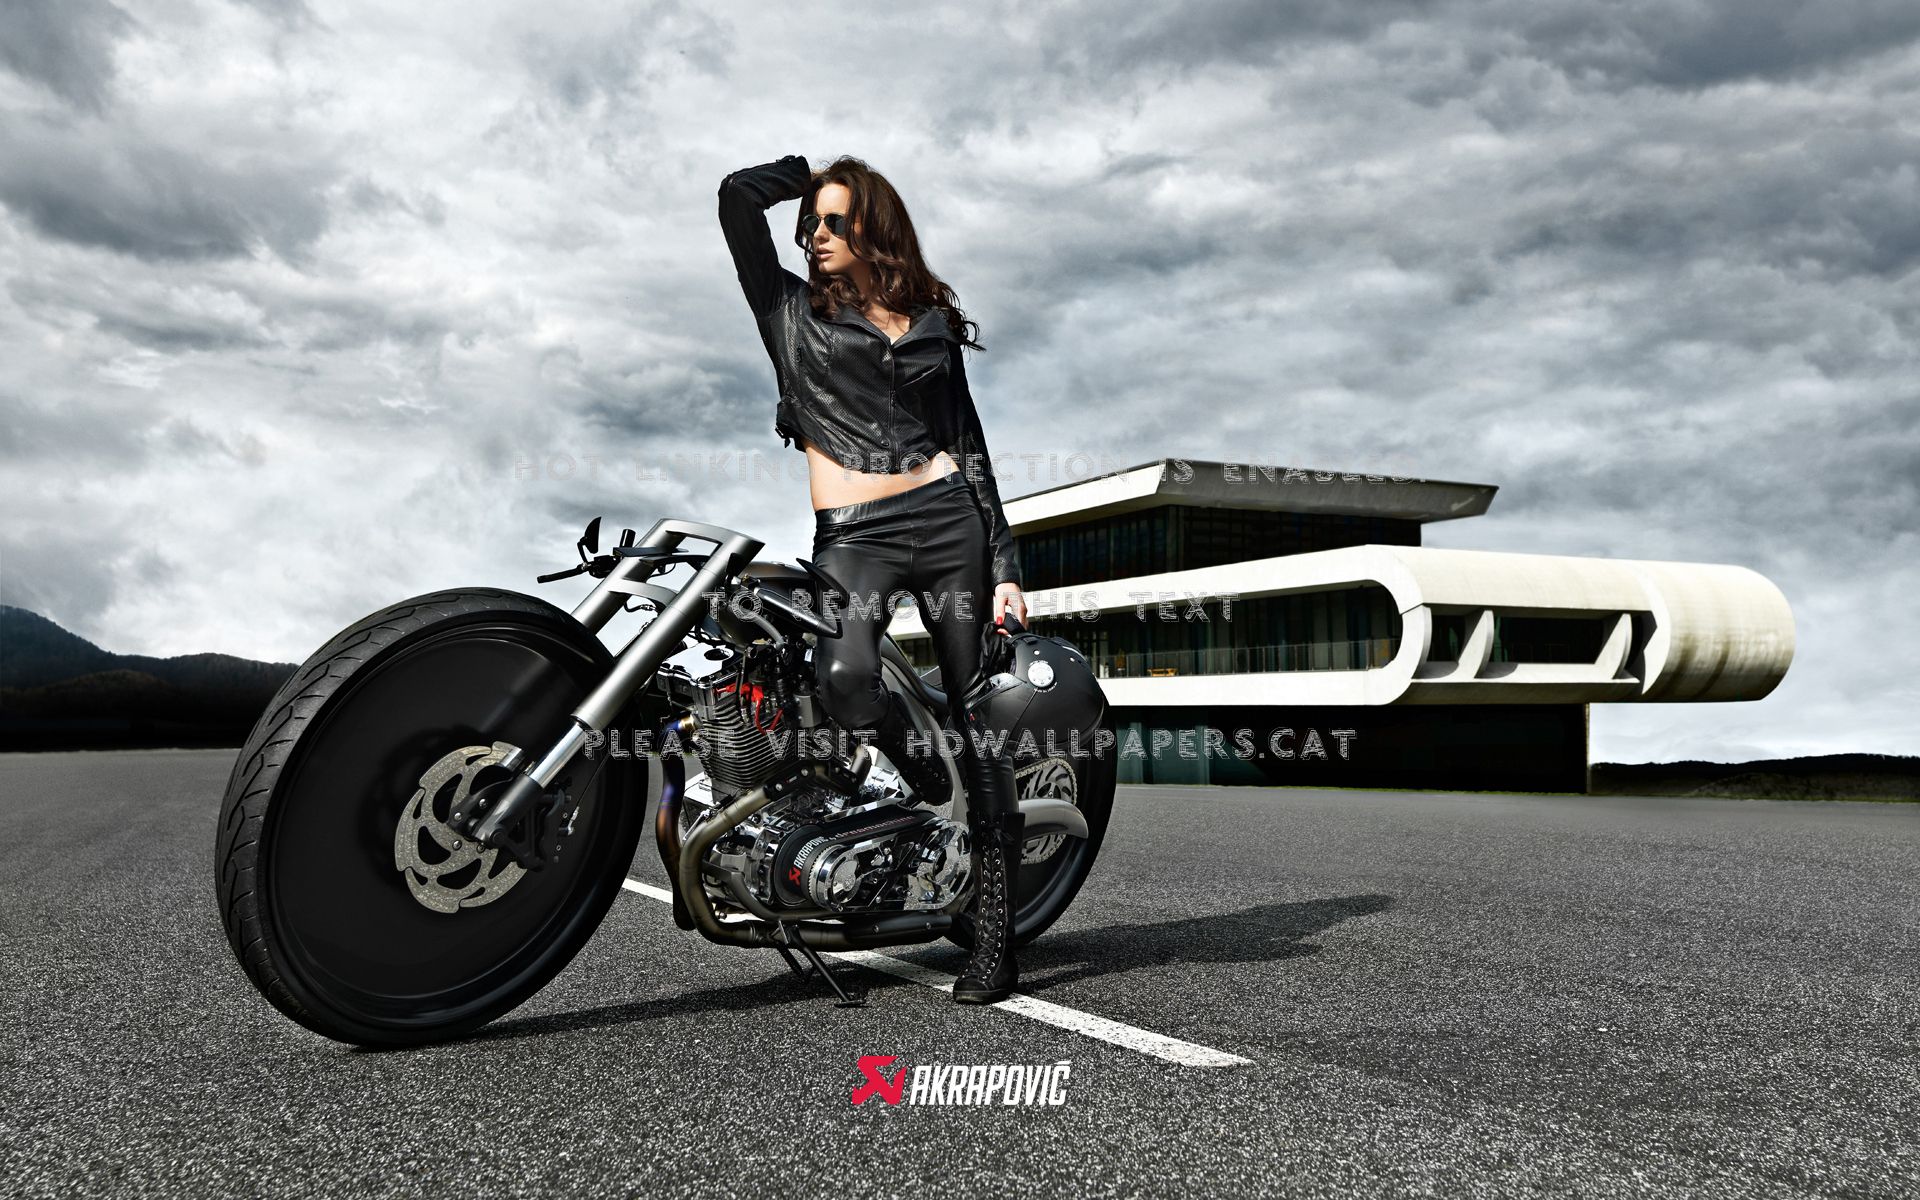 Arkapovic Biker Girl Custom Motorbike Fast Bike Full HD